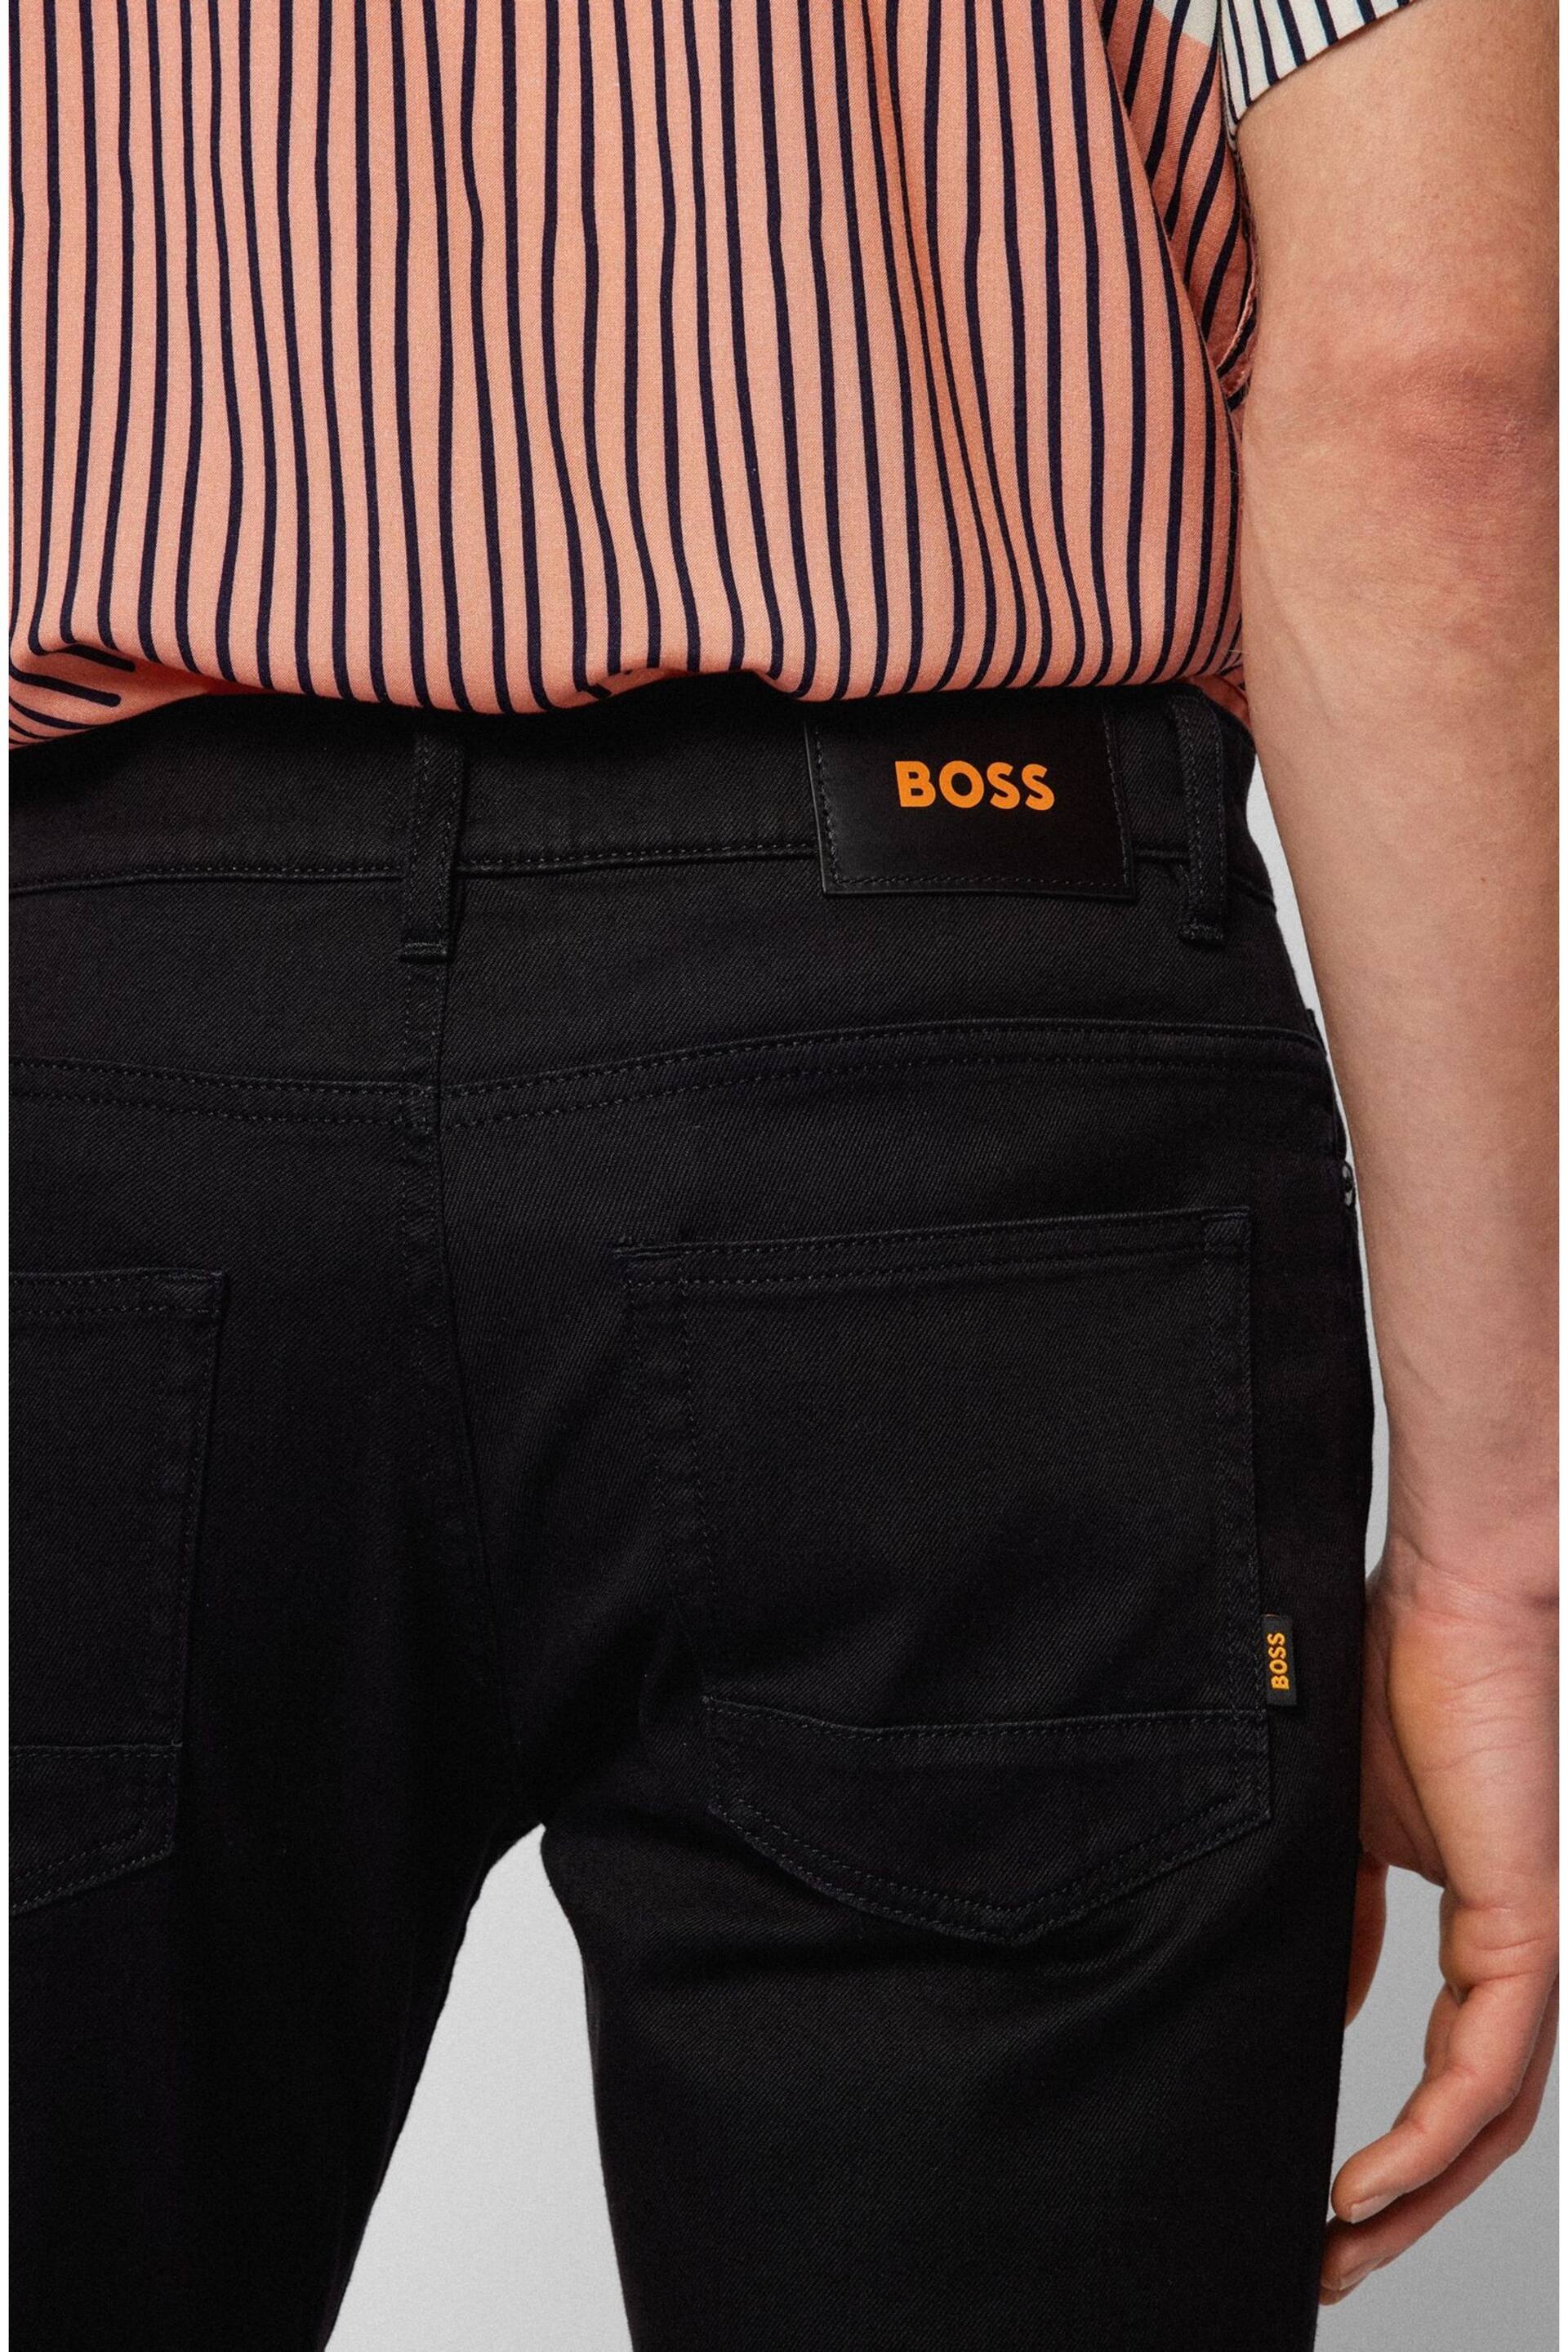 BOSS Black Slim Fit Comfort Stretch Denim Jeans - Image 4 of 5